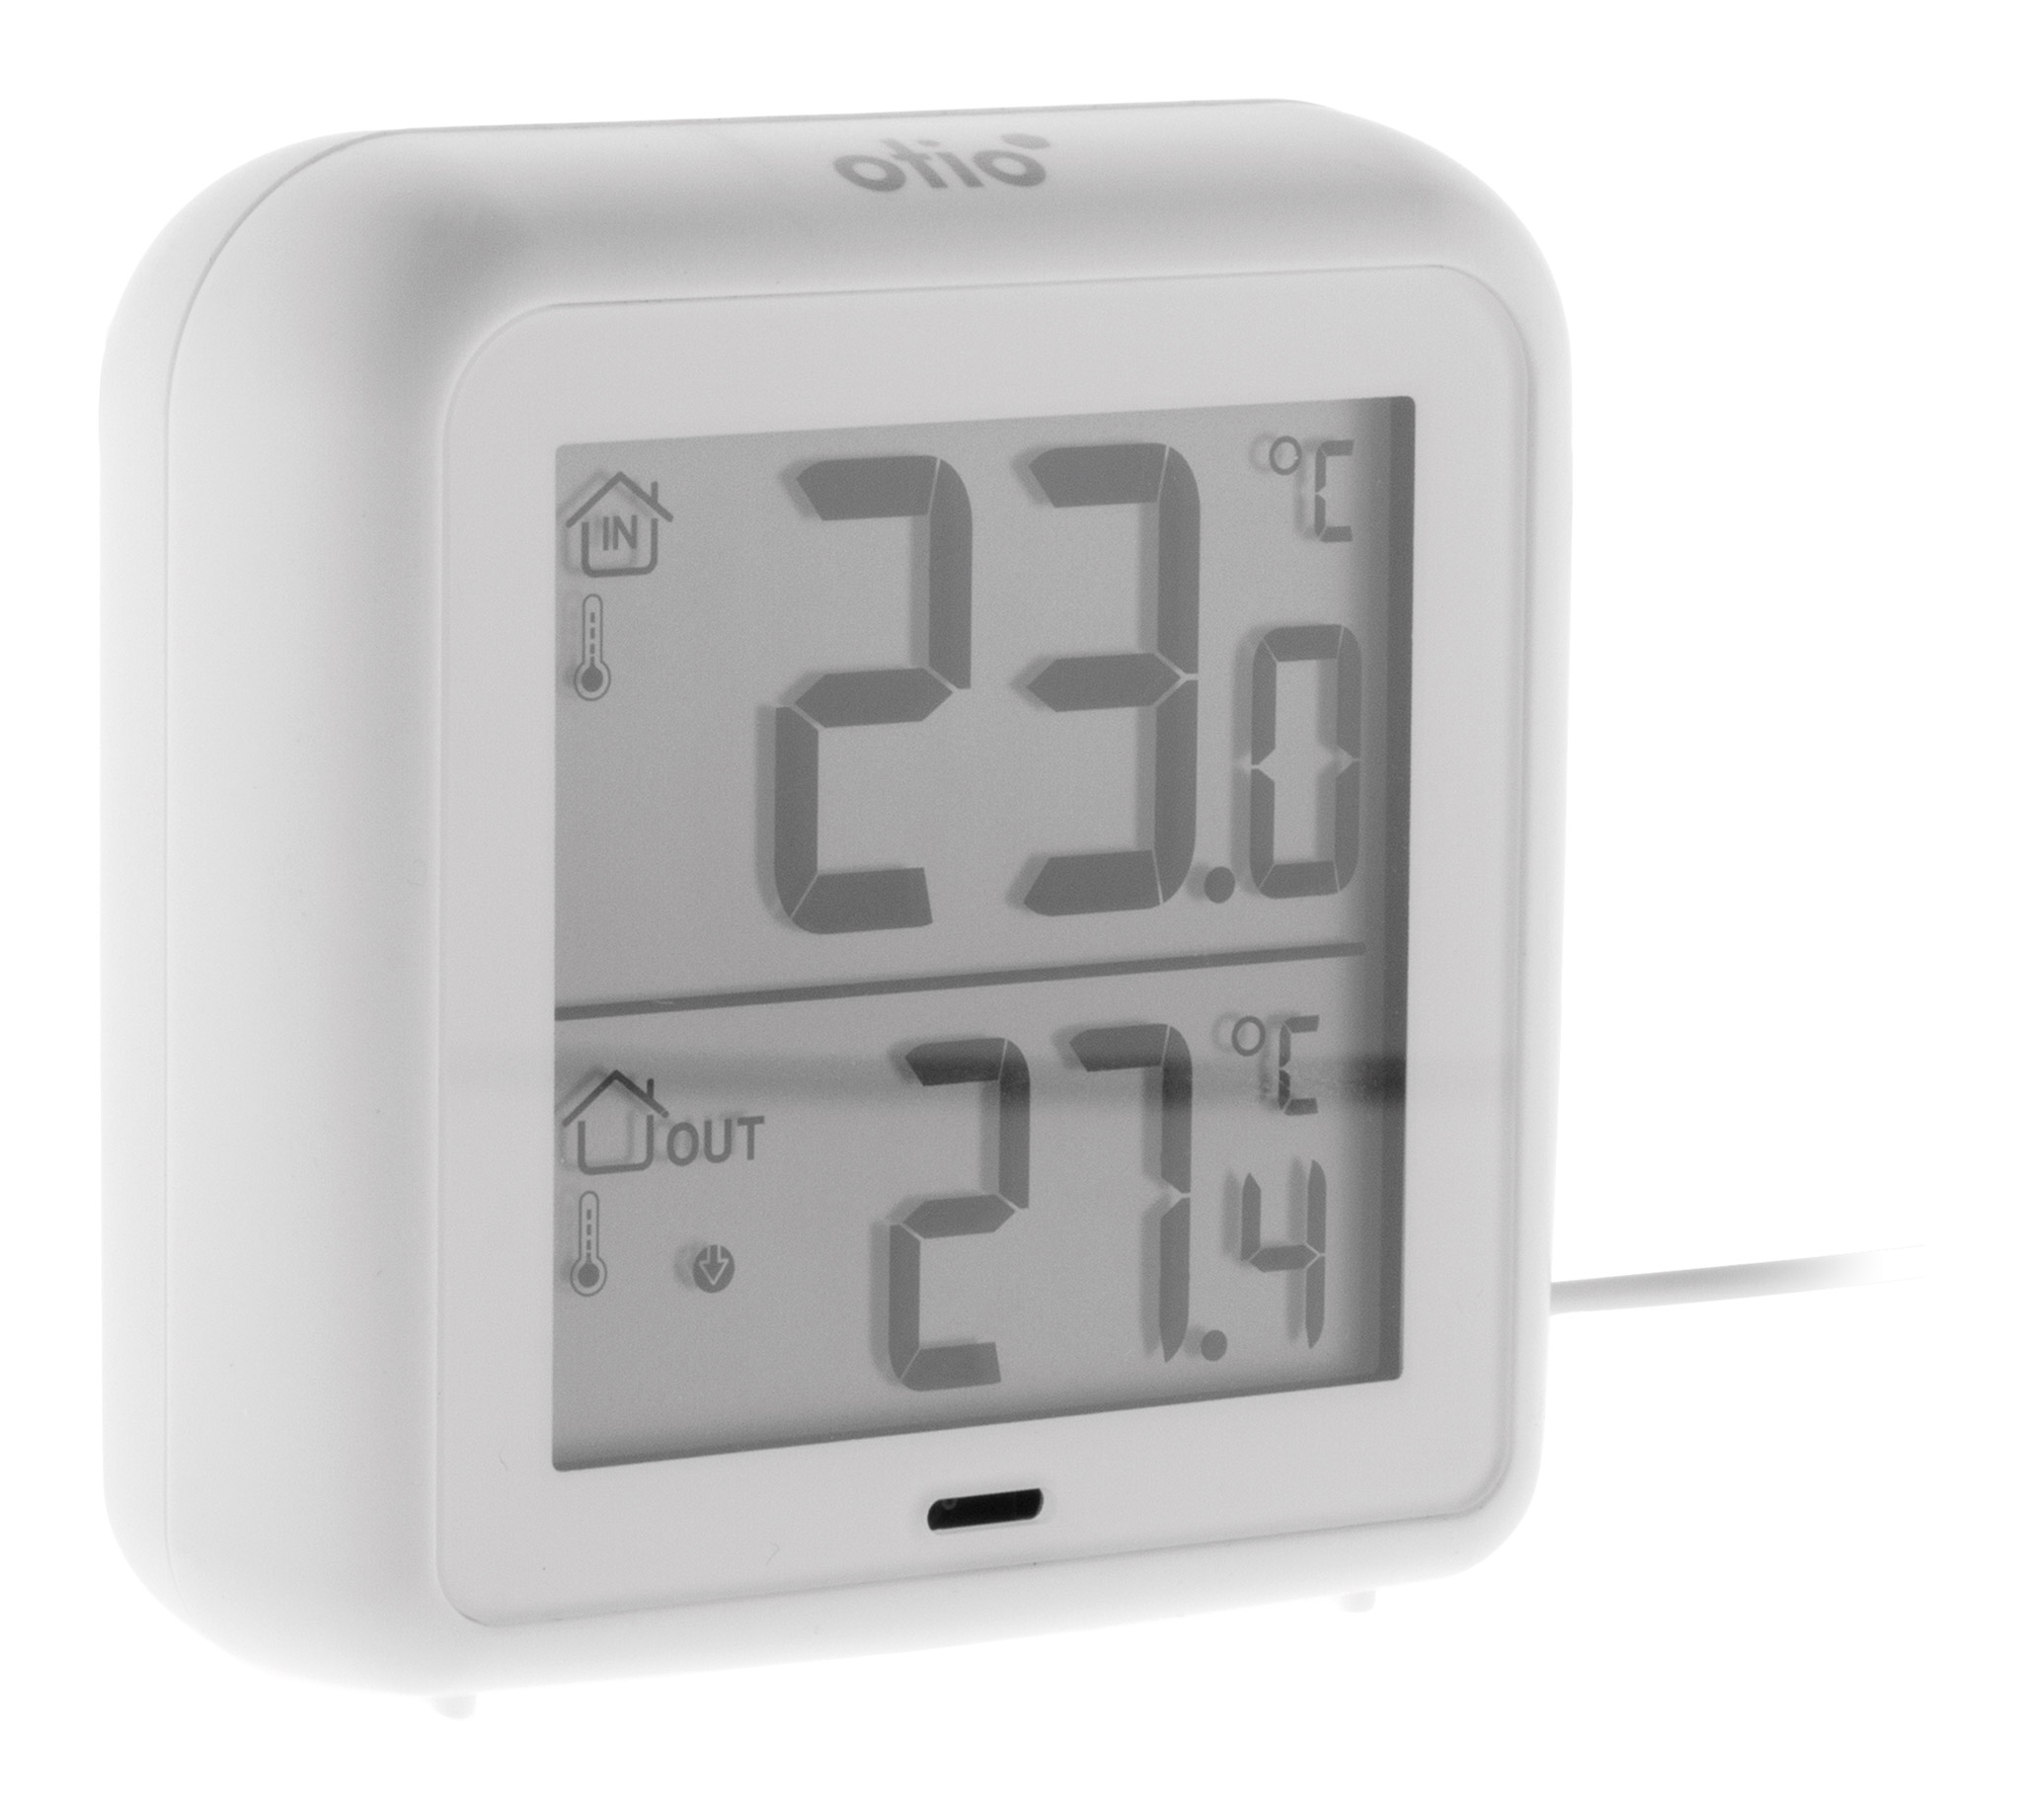 Thermomètre / hygromètre digital blanc, EQUATION